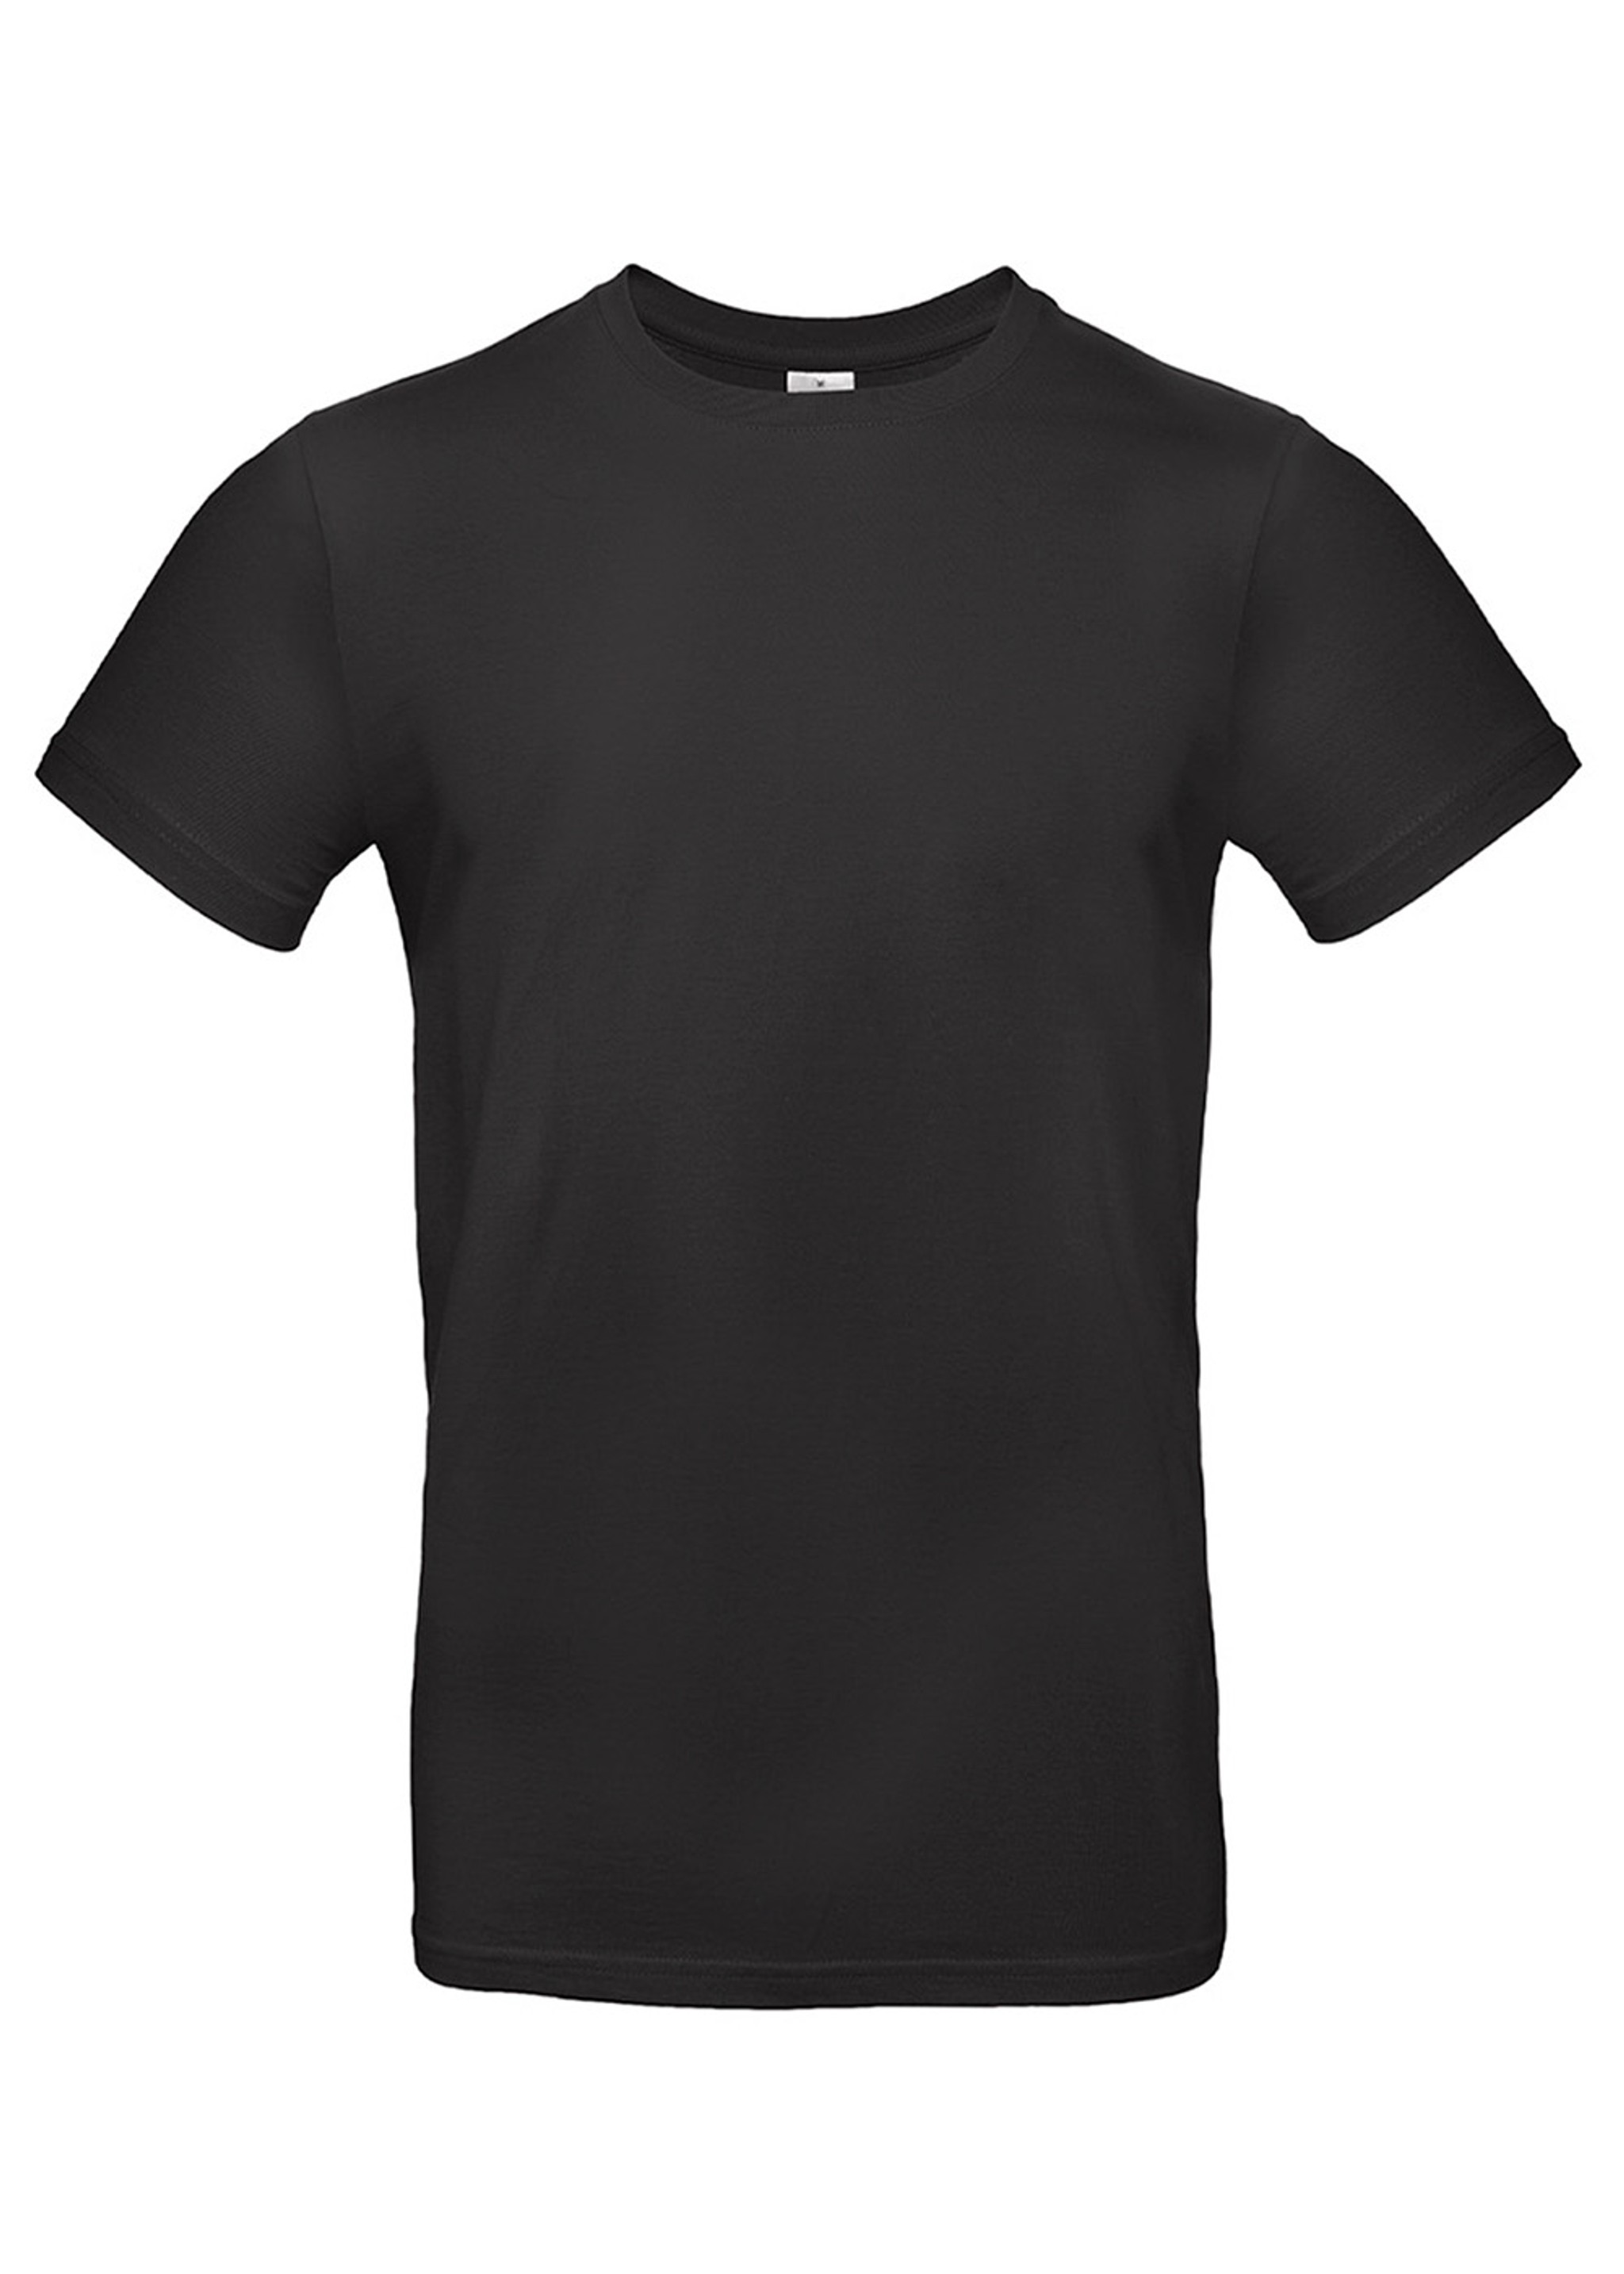 Unisex Fashion T-shirt Black